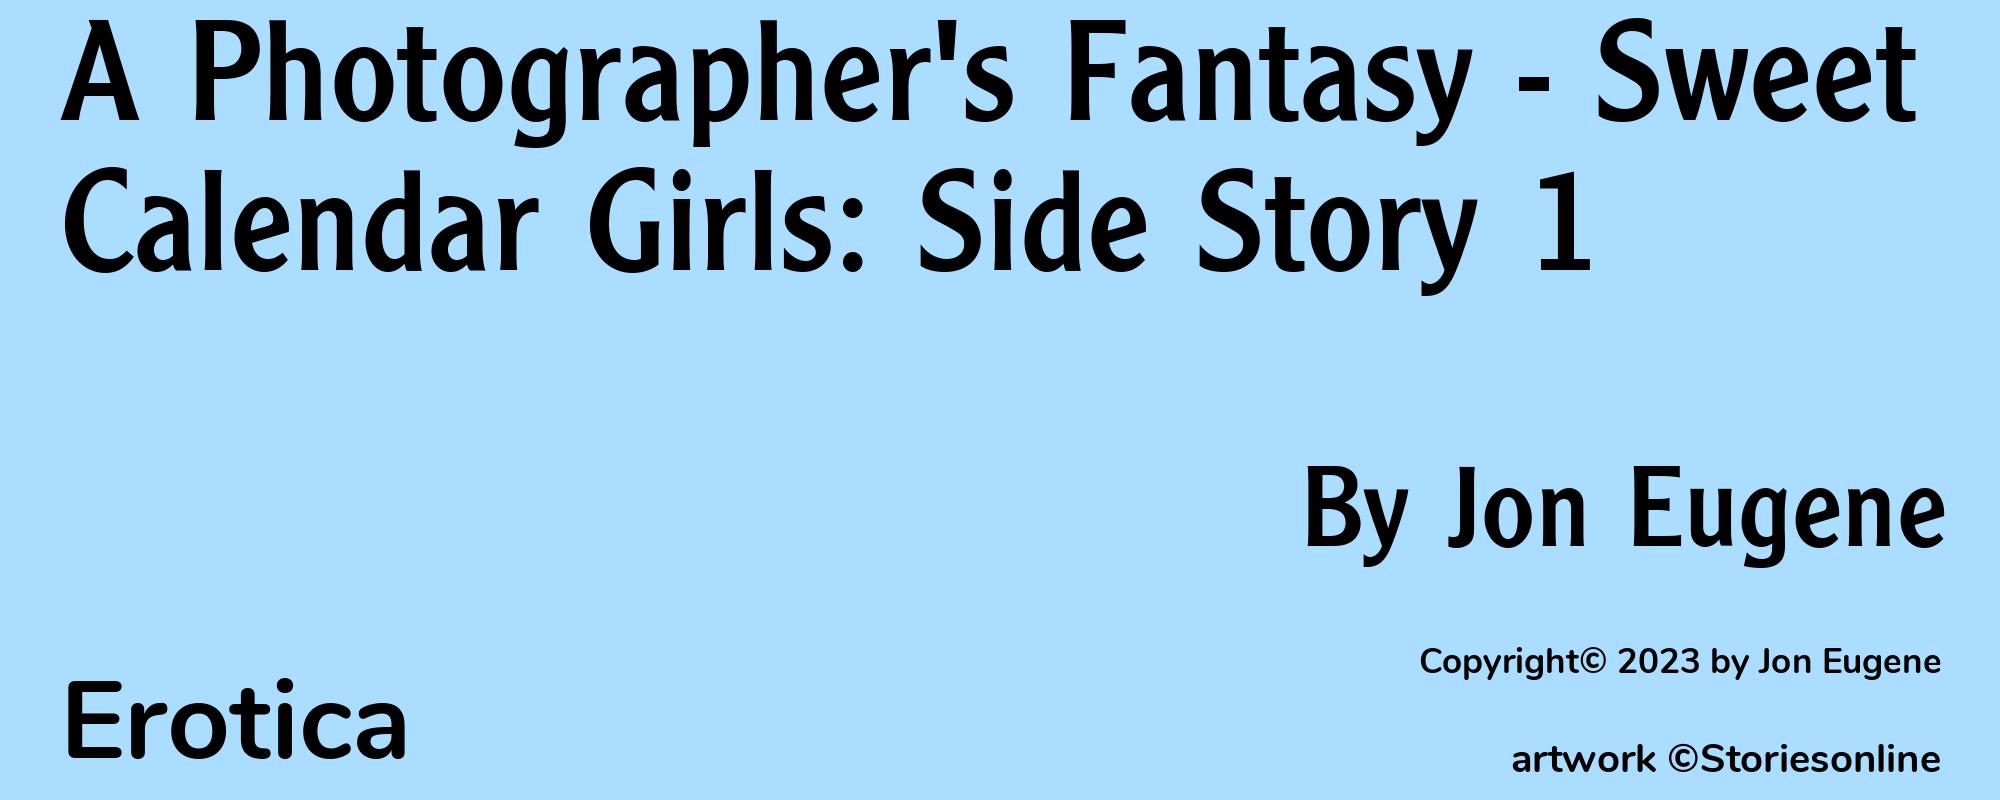 A Photographer's Fantasy - Sweet Calendar Girls: Side Story 1 - Cover